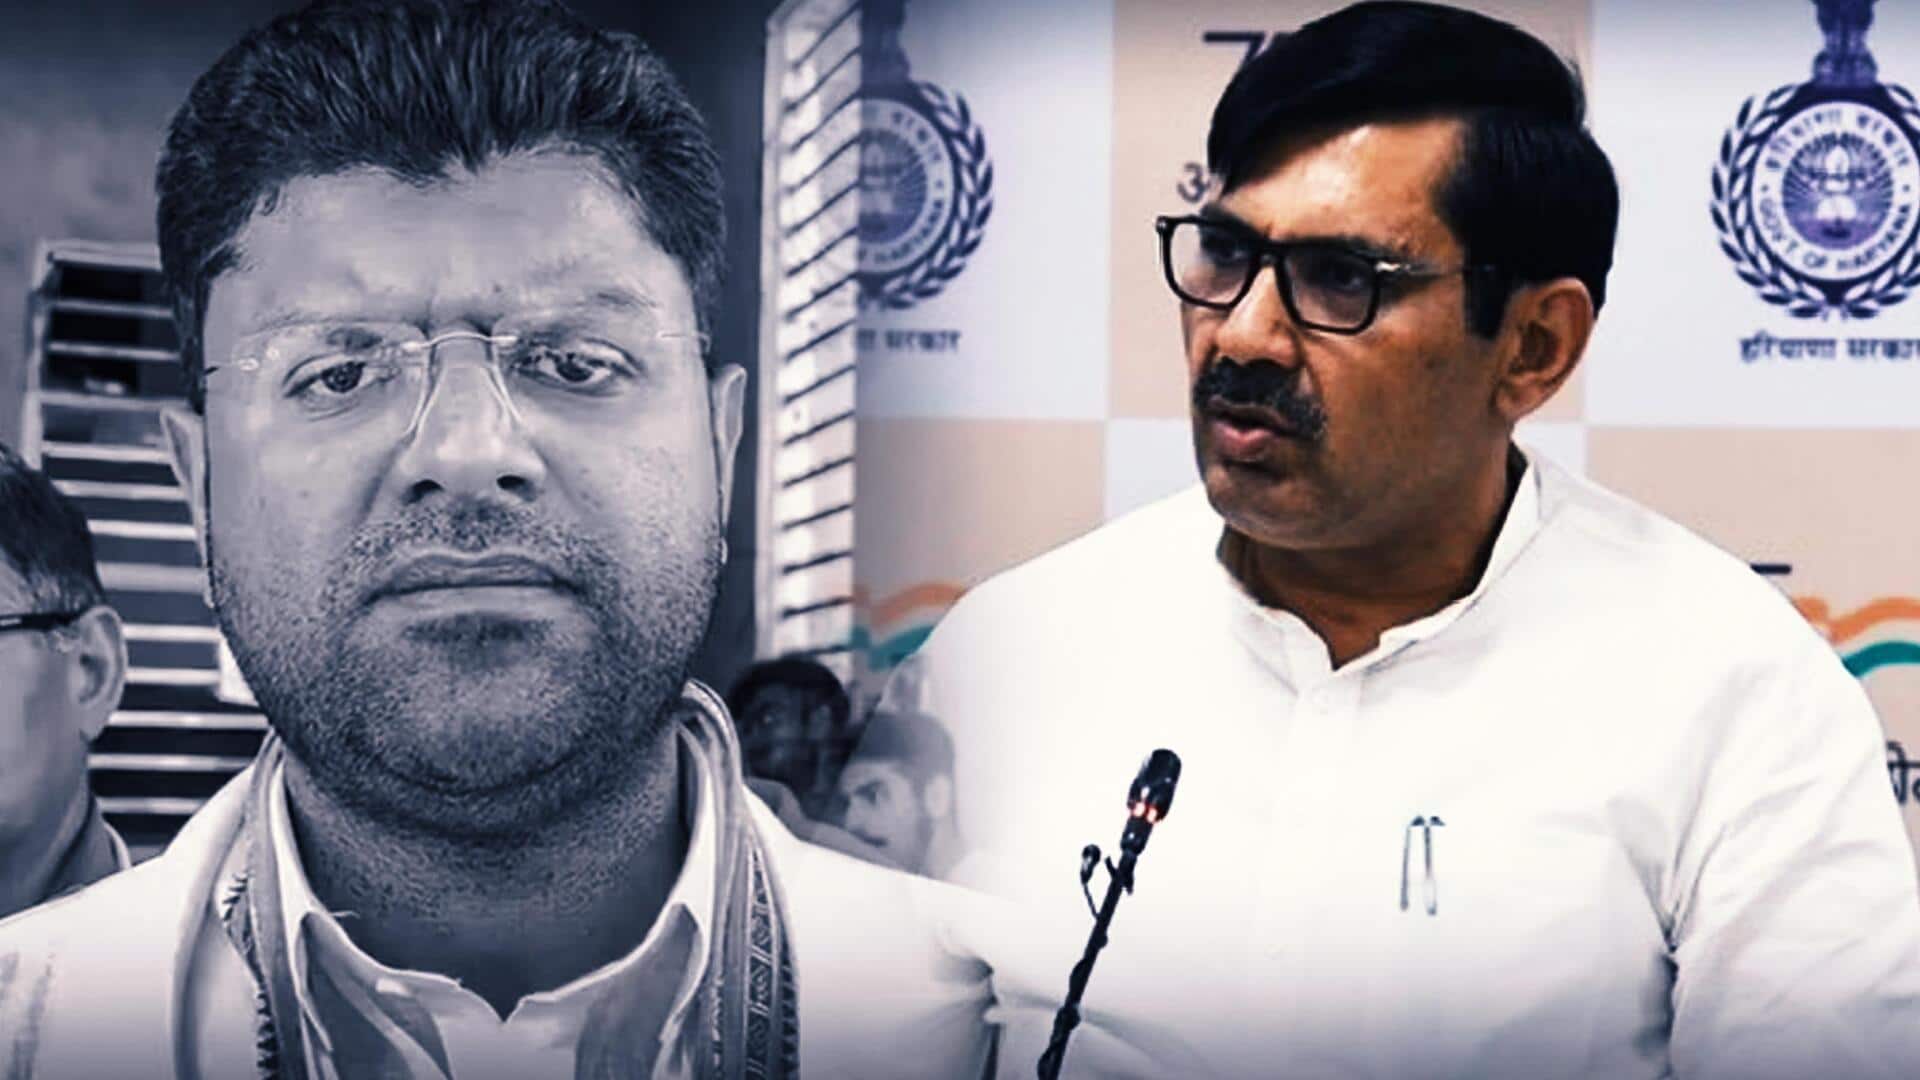 Amid Haryana political crisis, JJP MLA questions Dushyant Chautala's authority